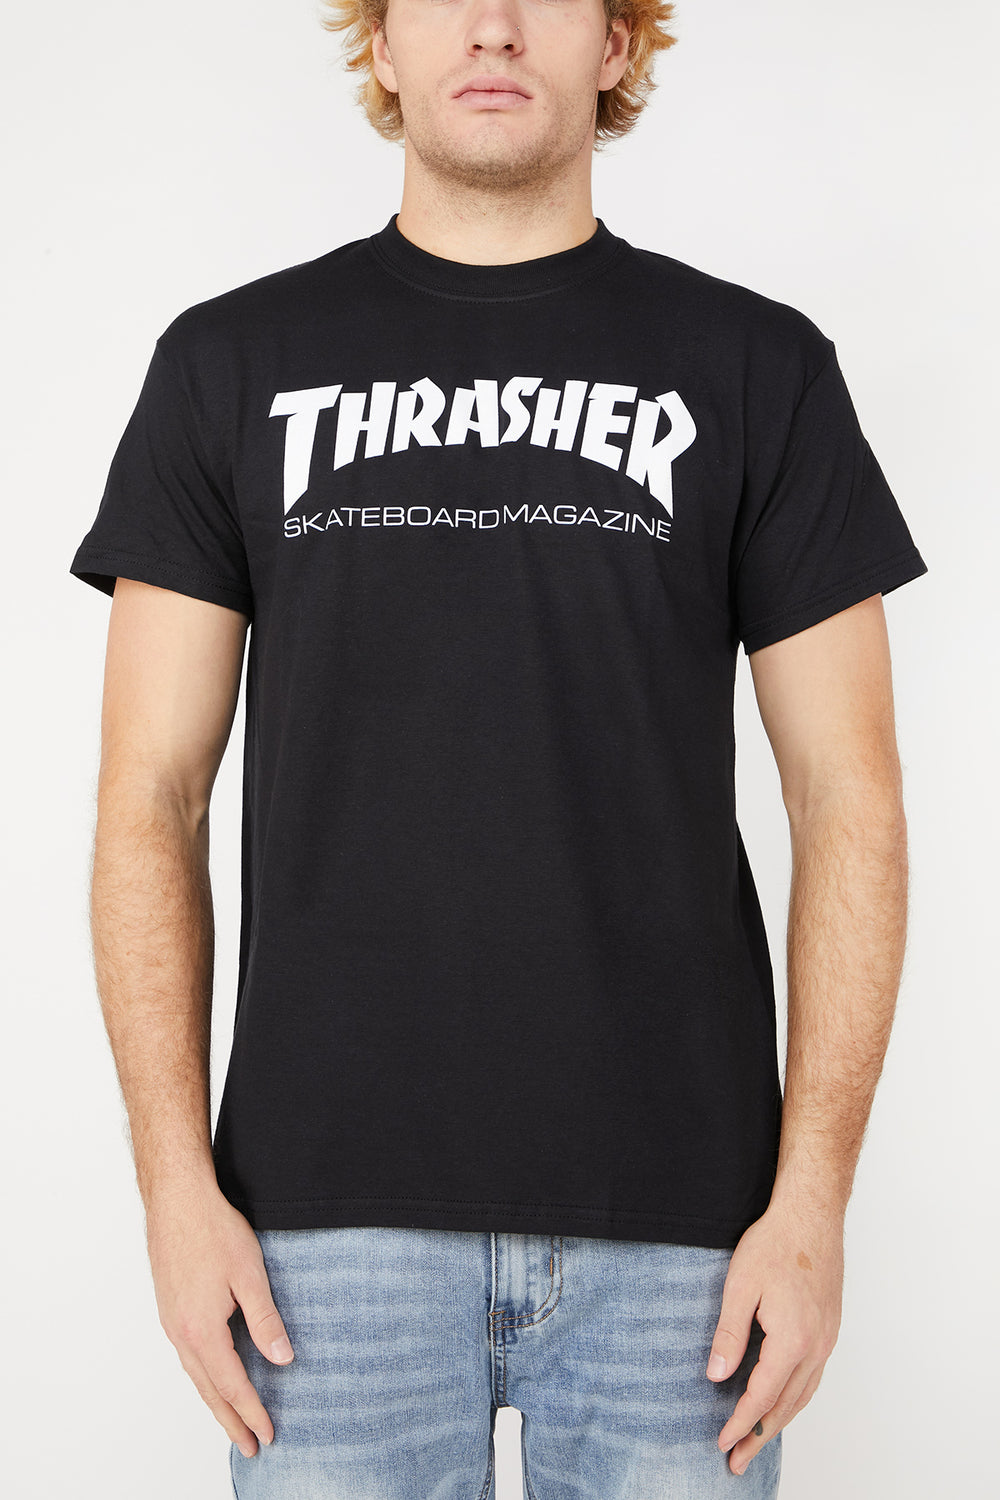 Thrasher Magazine Logo Black T-Shirt Black